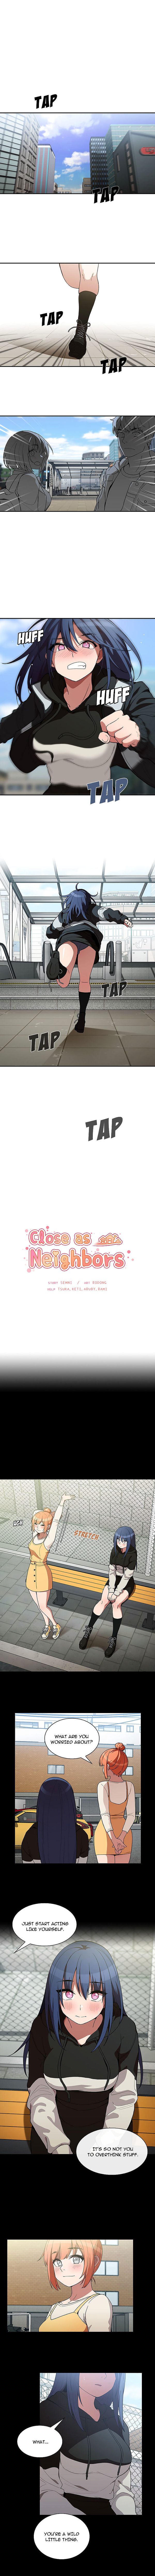 Close as Neighbors - part 13